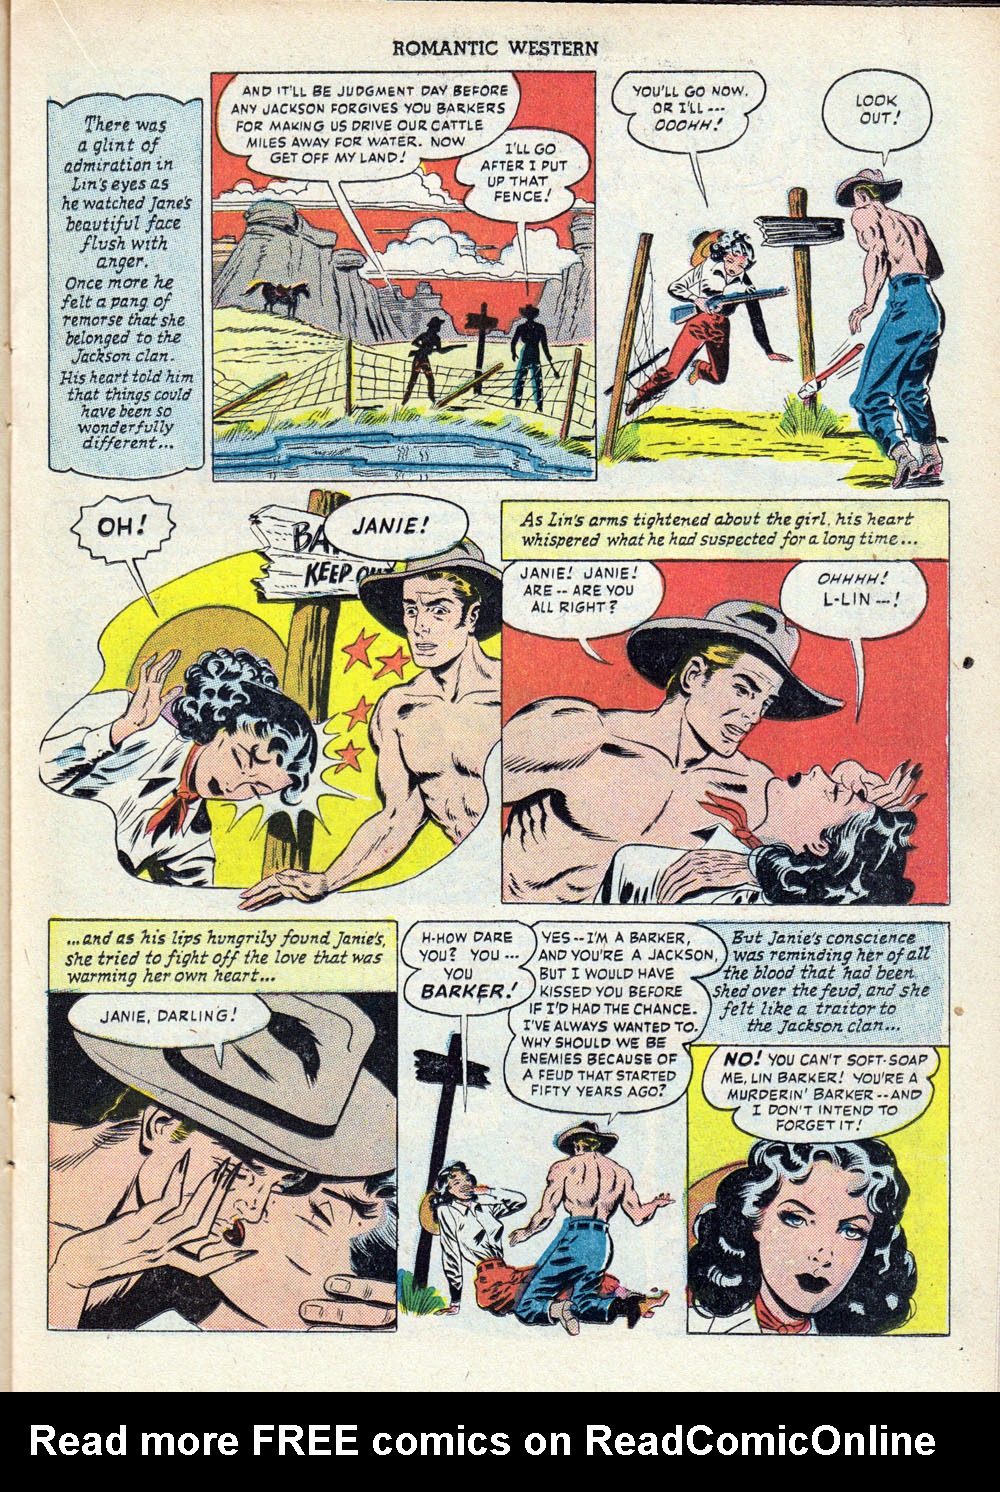 Read online Romantic Western comic -  Issue #1 - 15